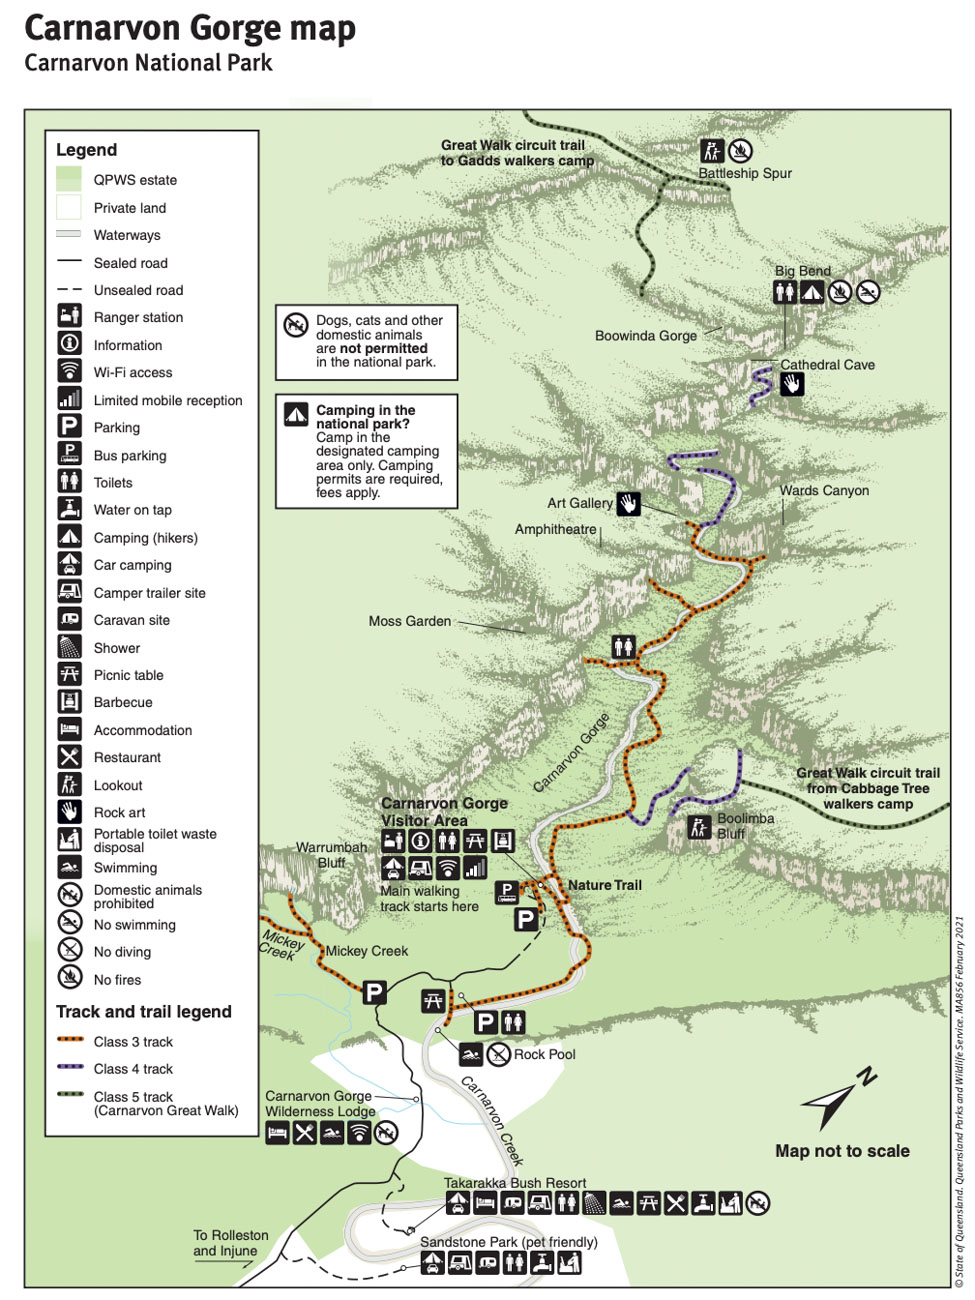 Carnarvon Gorge Map from Queensland Parks and Wildlife Service